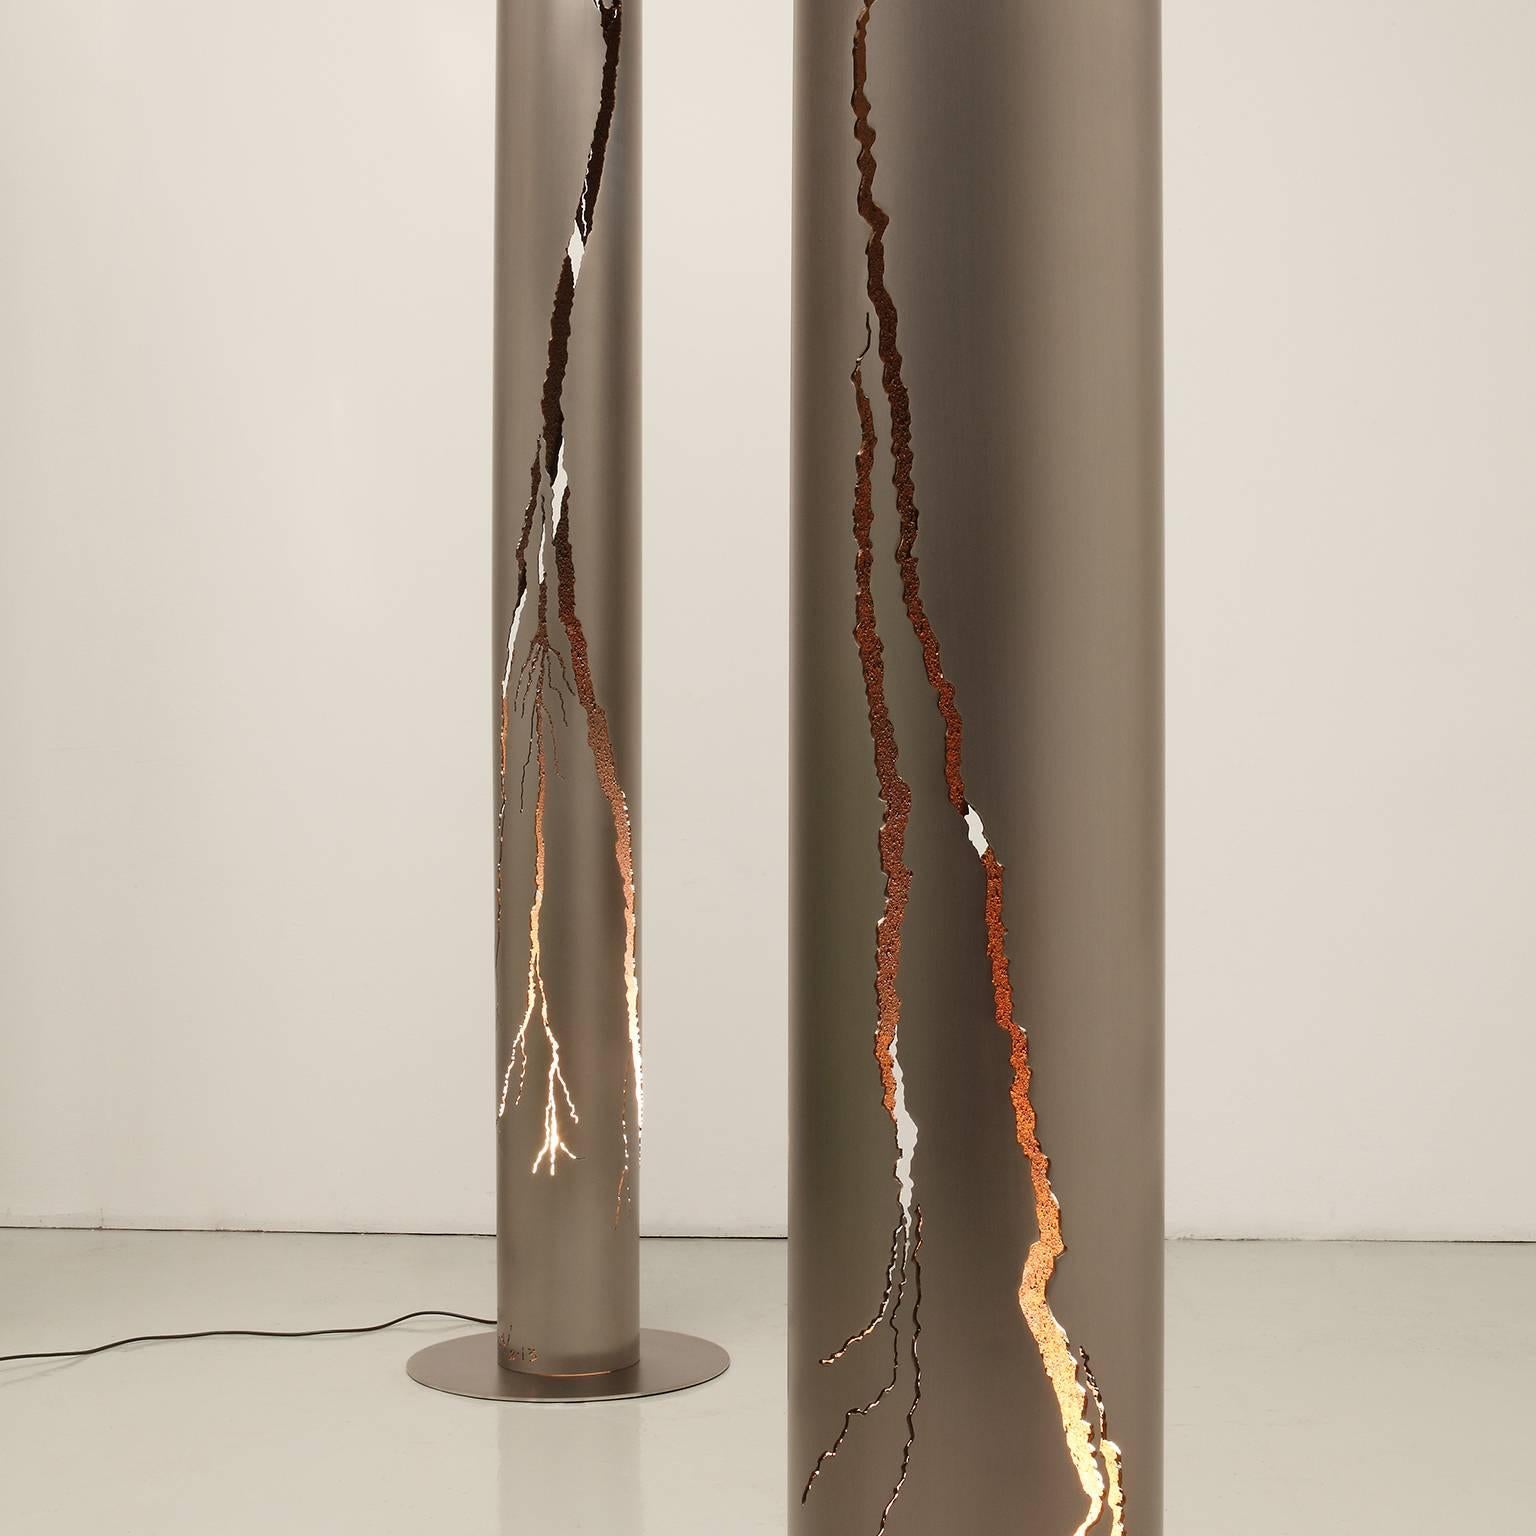 Bronzed Gianluca Pacchioni, Cut I Sculptural Lighting, 2014